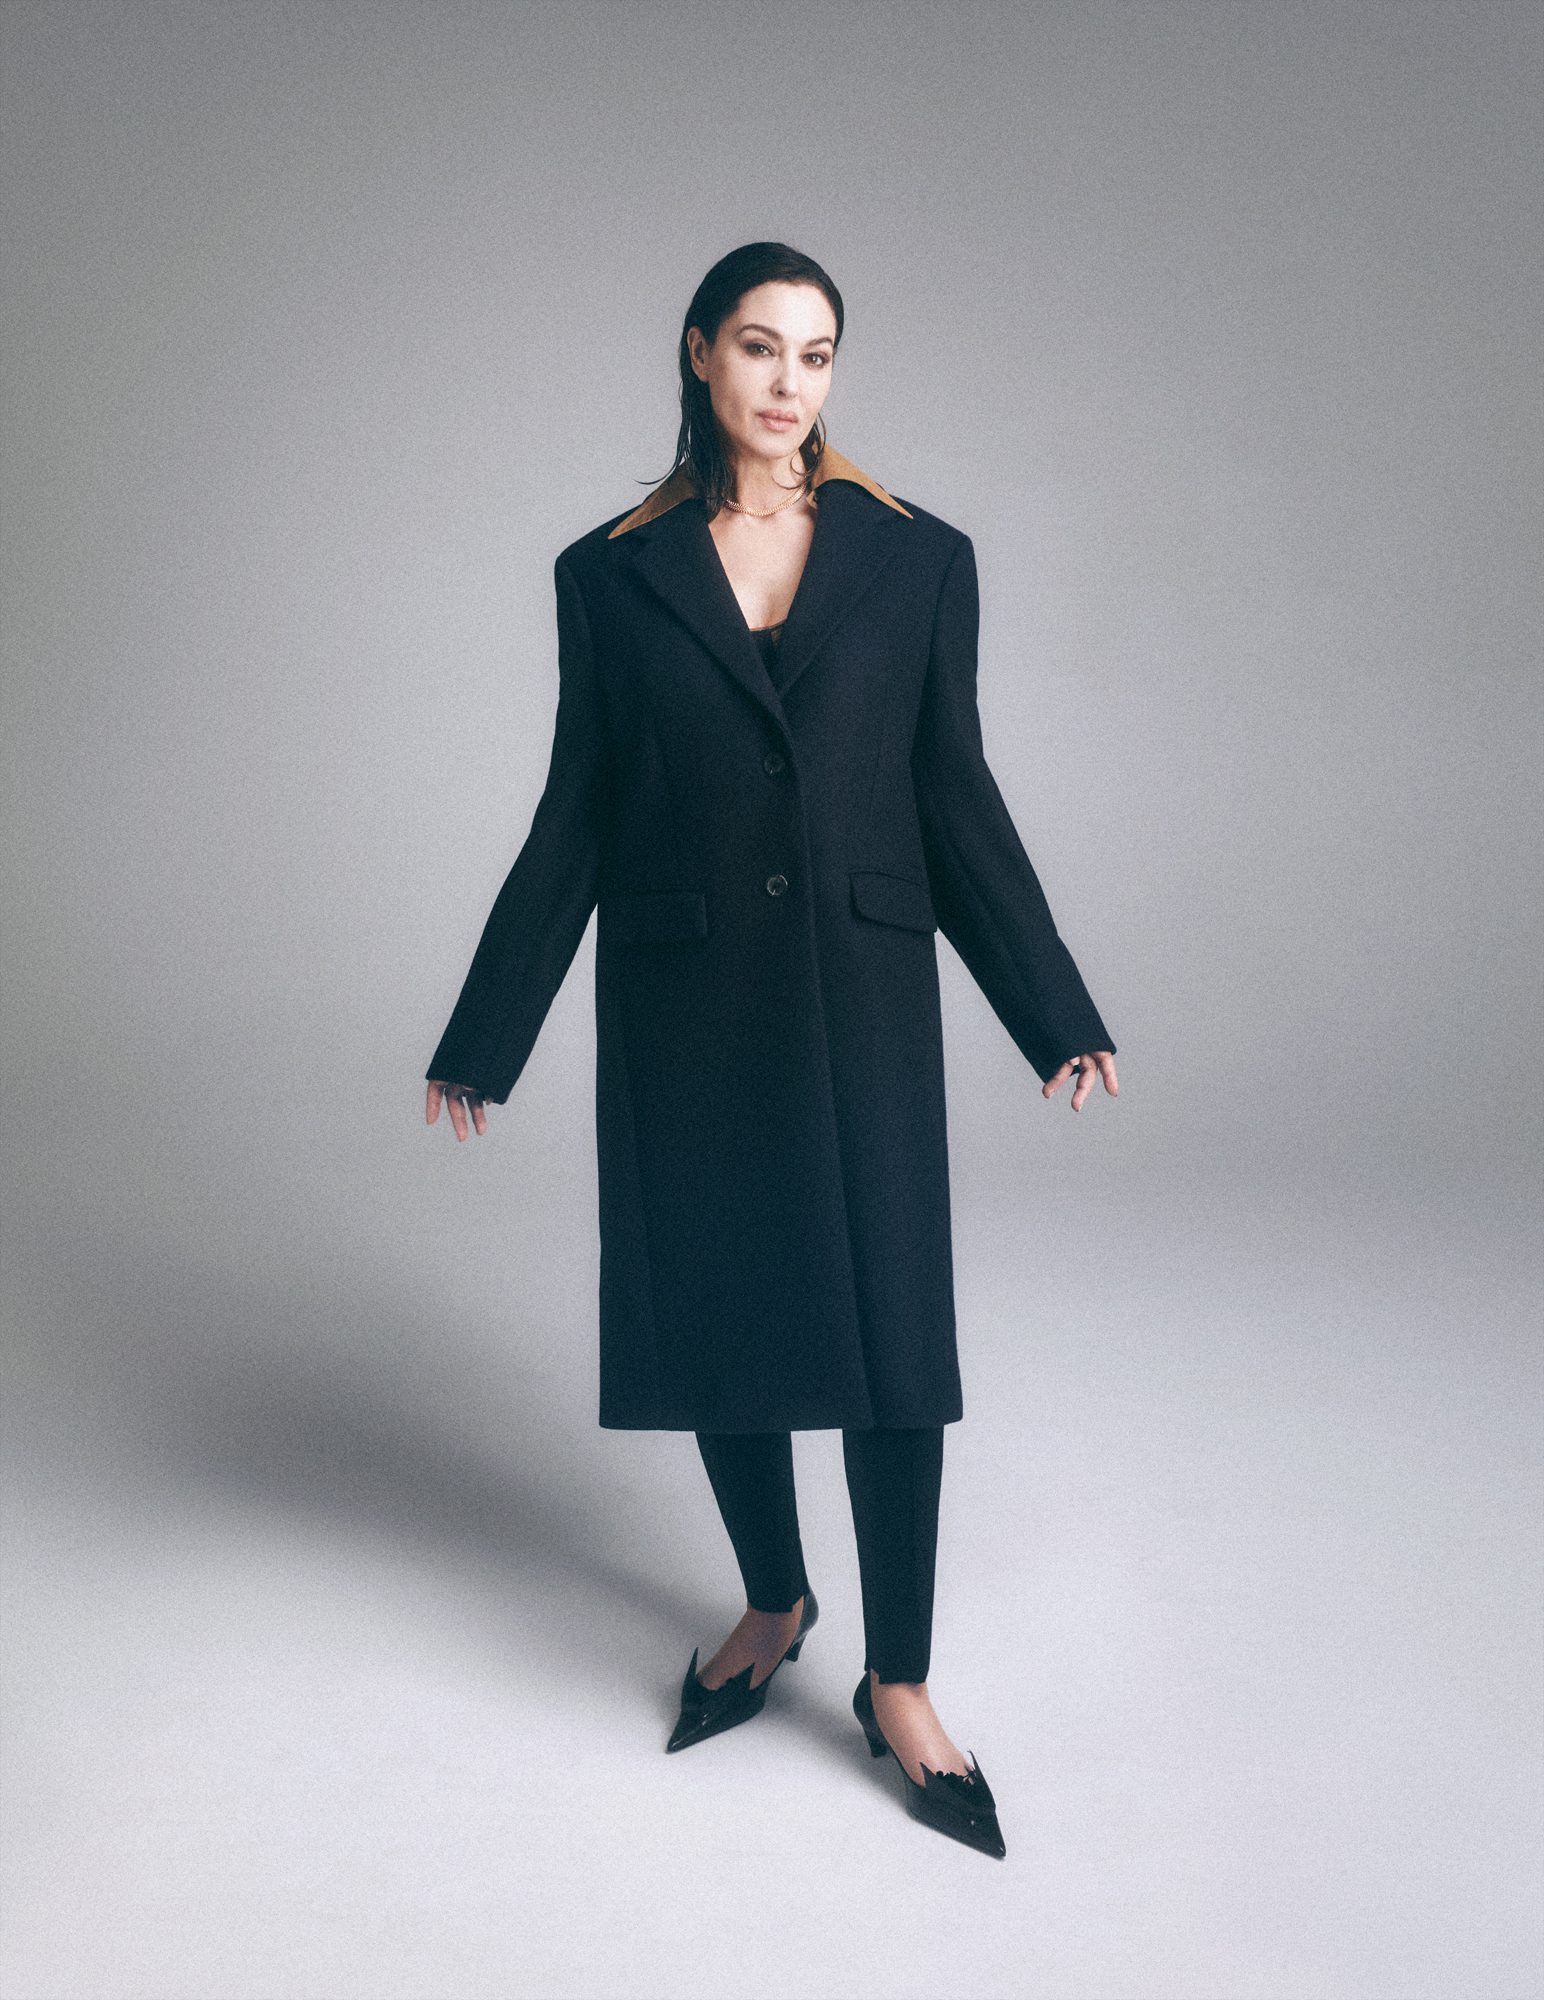 Editorial for Harper's Bazaar Spain with Monica Bellucci by Xavi Gordo | Raquel Sueiro